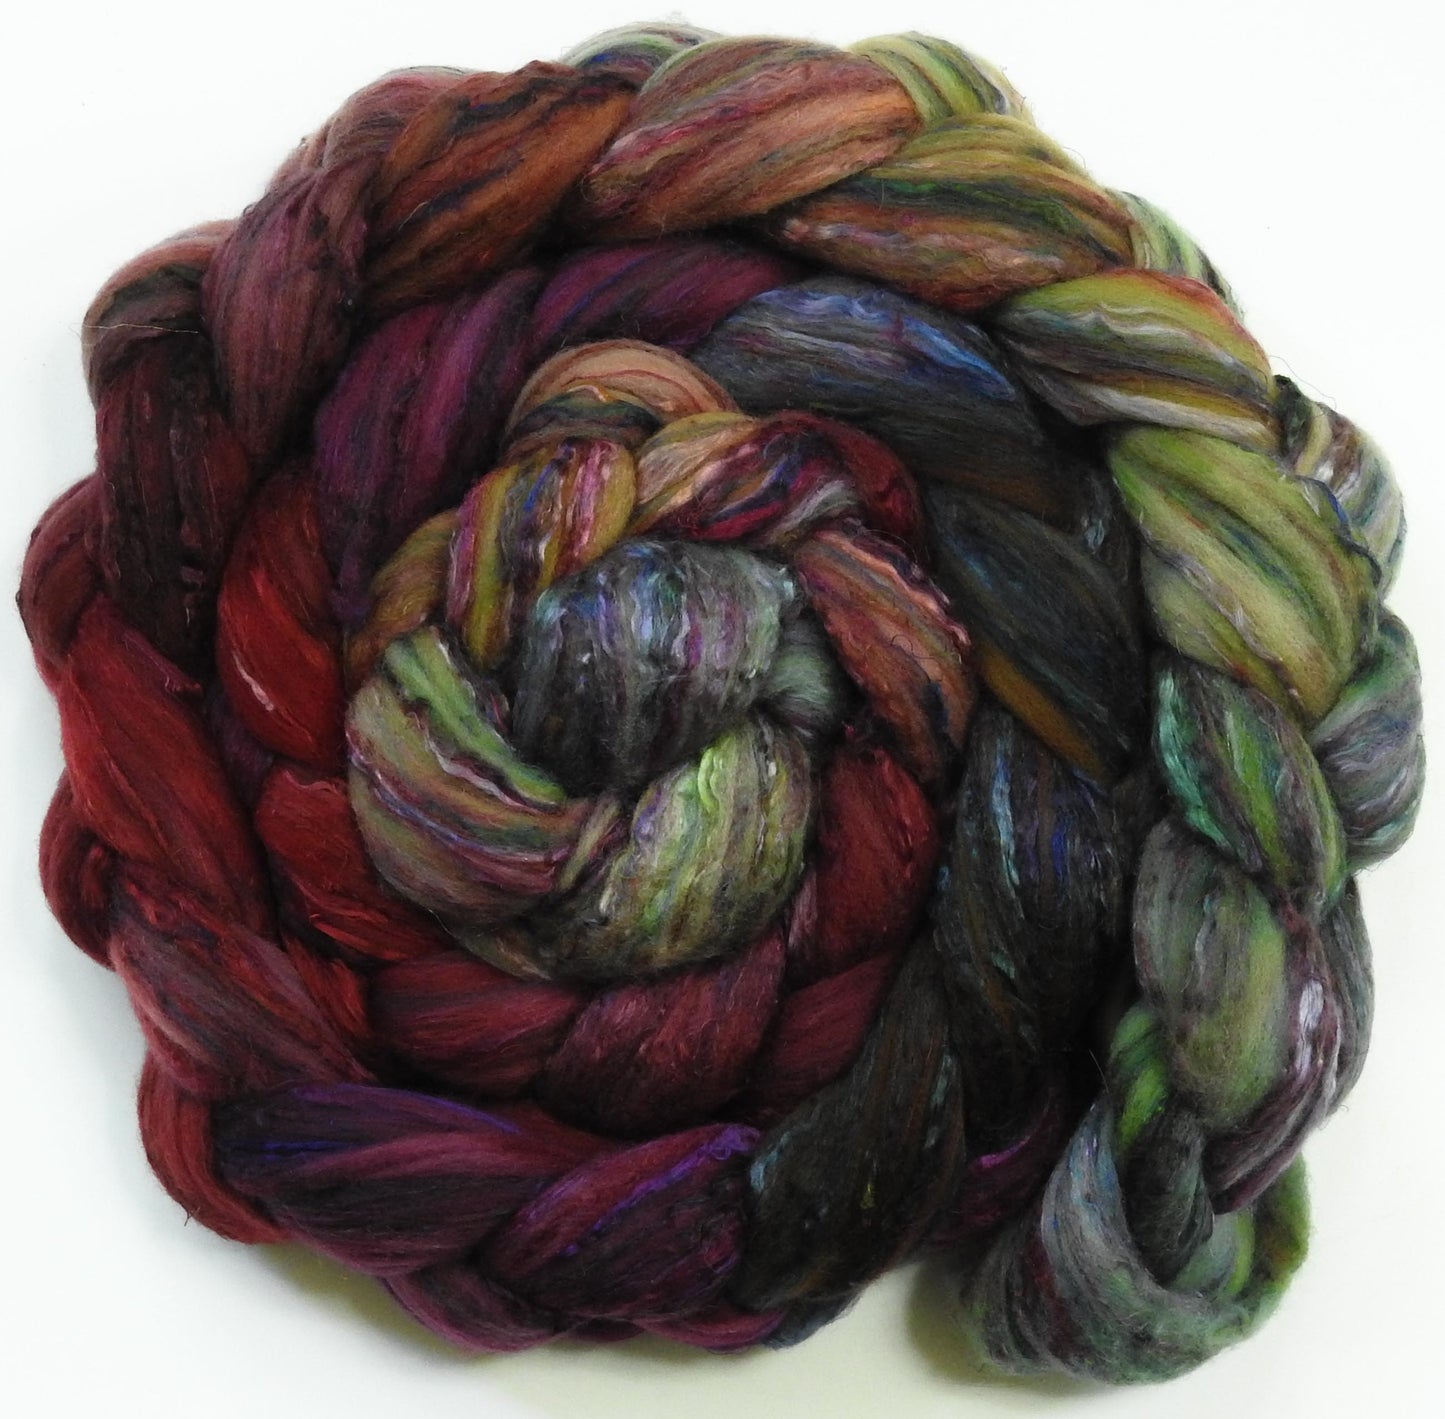 Icelandic Poppies-Batt in a Braid #39 (5.9 oz)- Falkland Merino/ Mulberry Silk / Sari Silk (50/25/25)